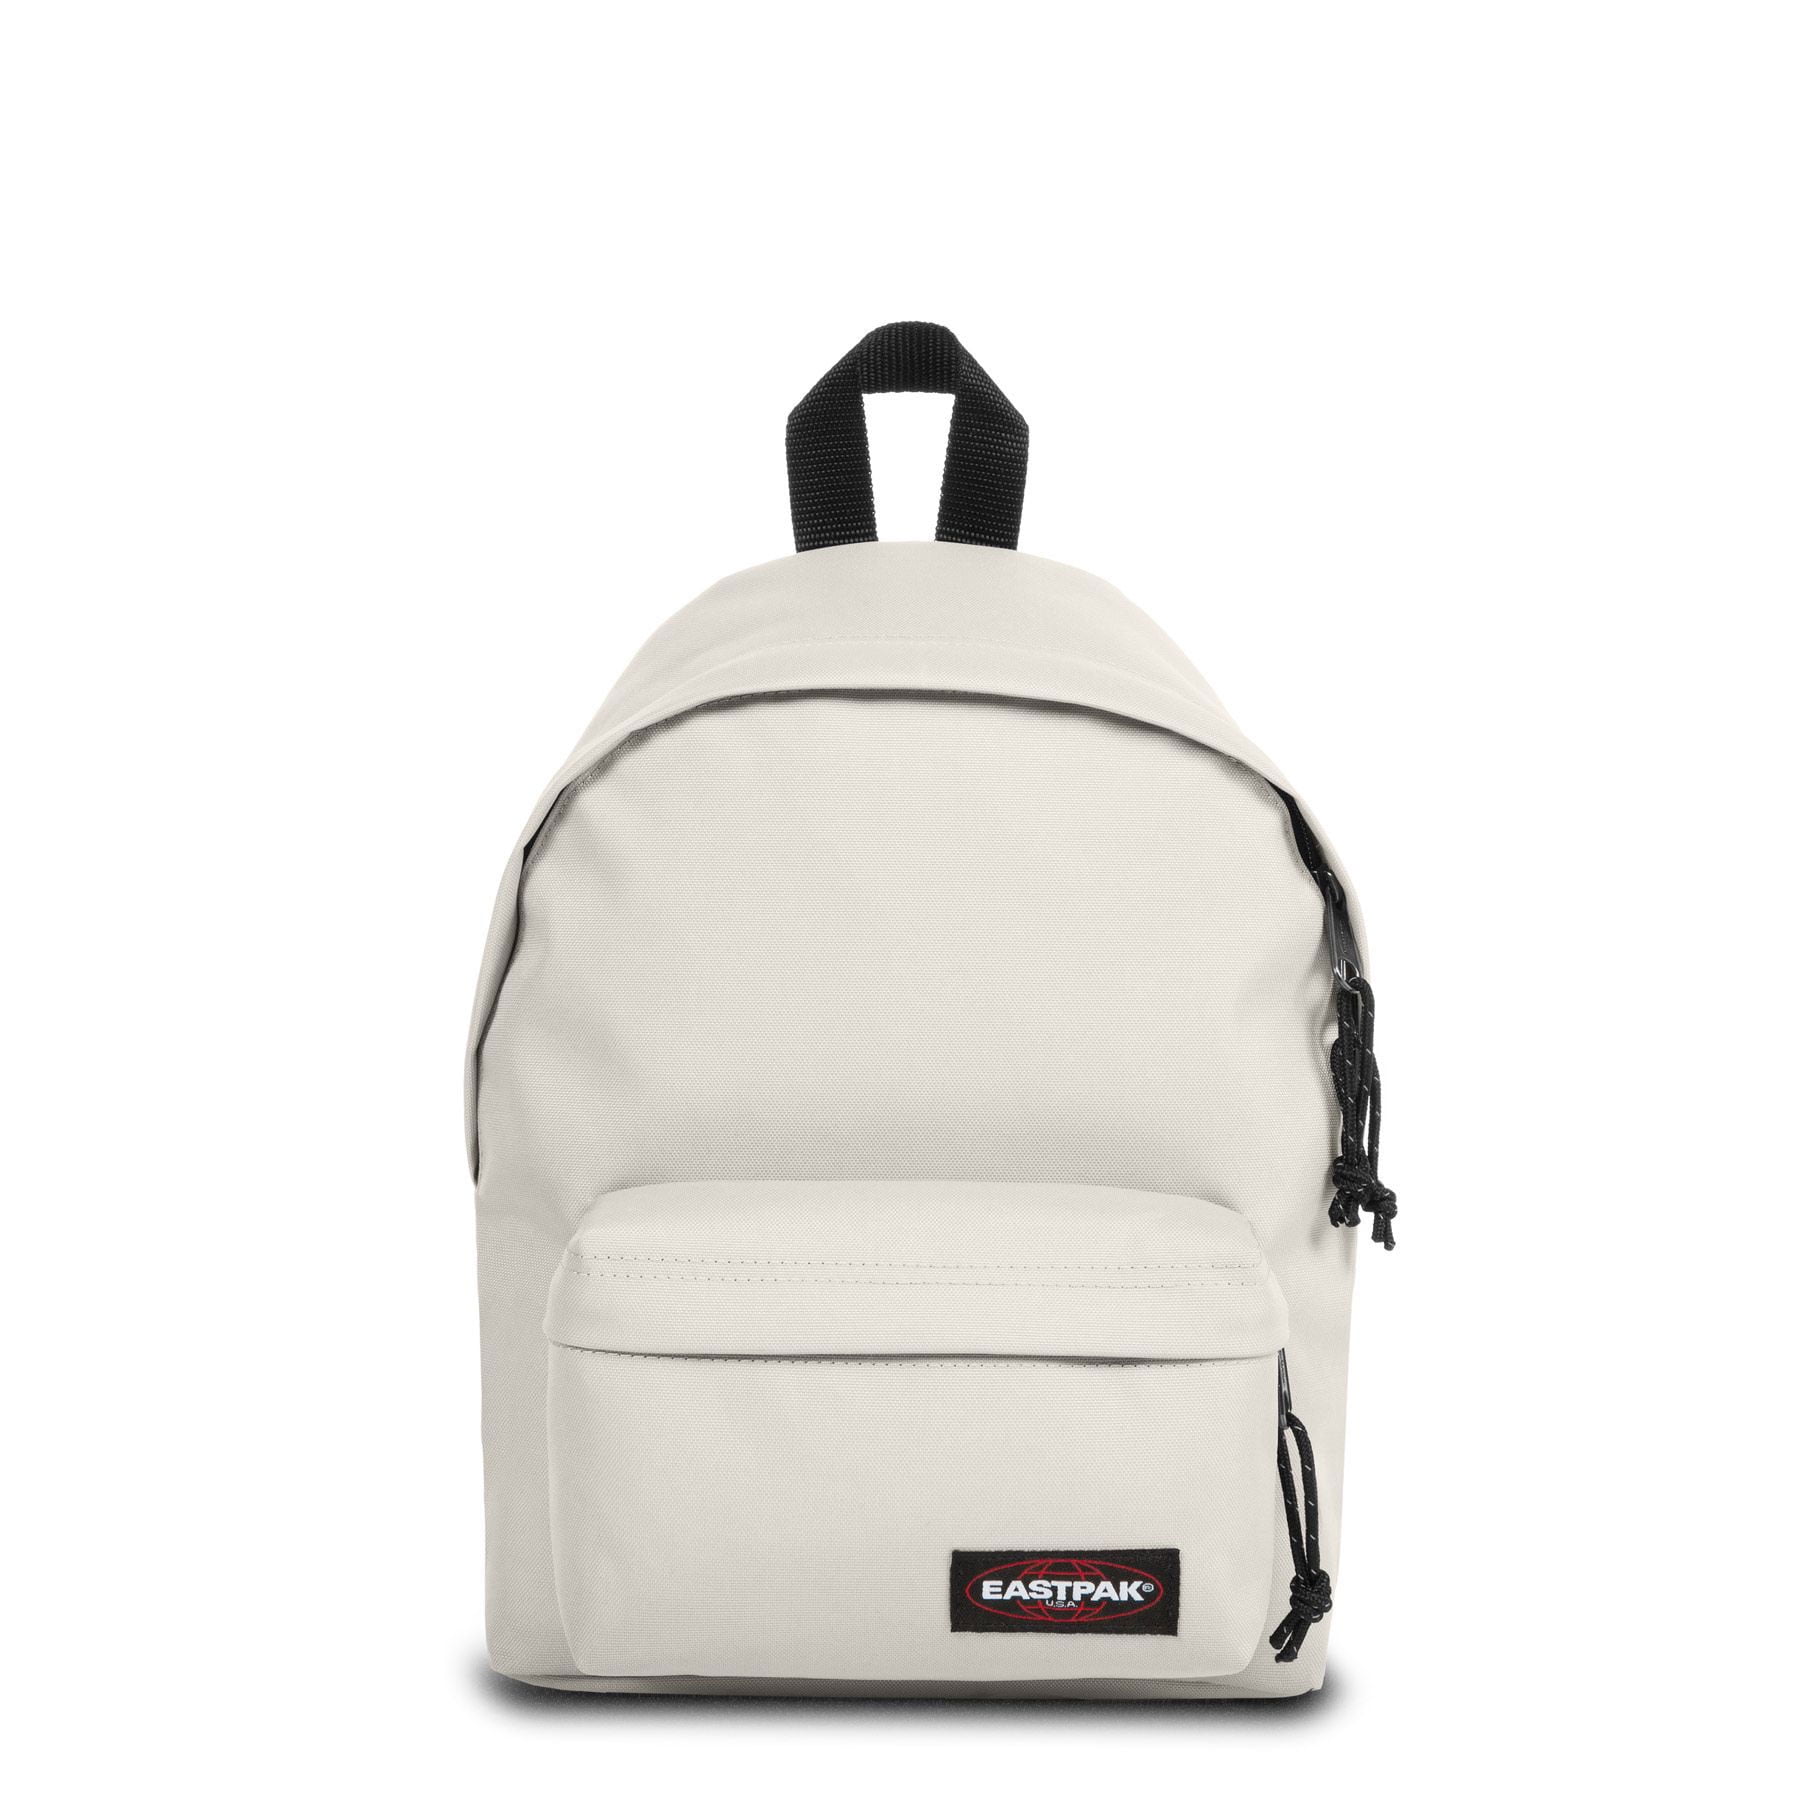 EASTPAK Orbit Mini Backpack, Free White, 10L Walmart.com